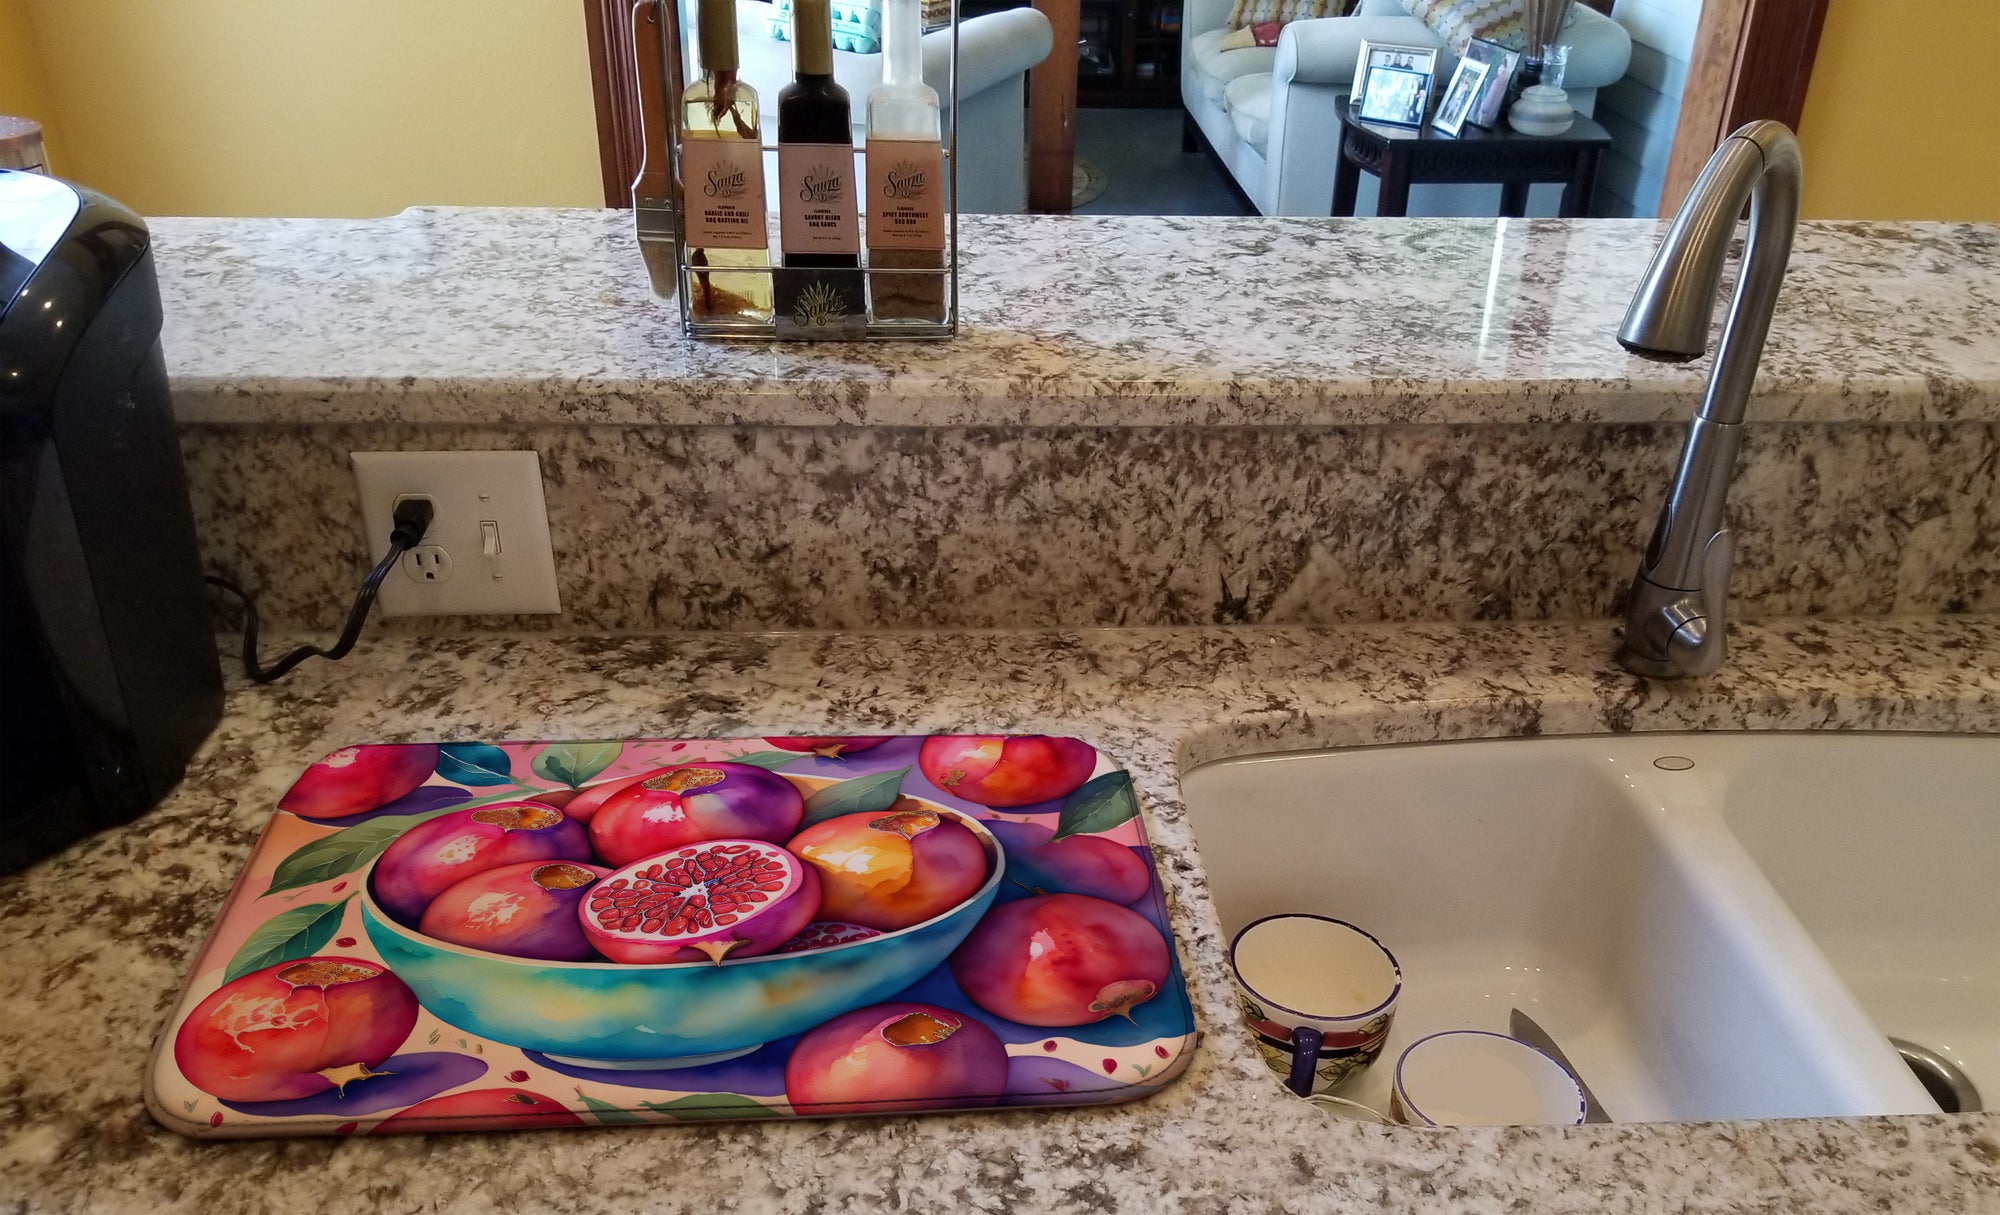 Buy this Colorful Pomegranates Dish Drying Mat